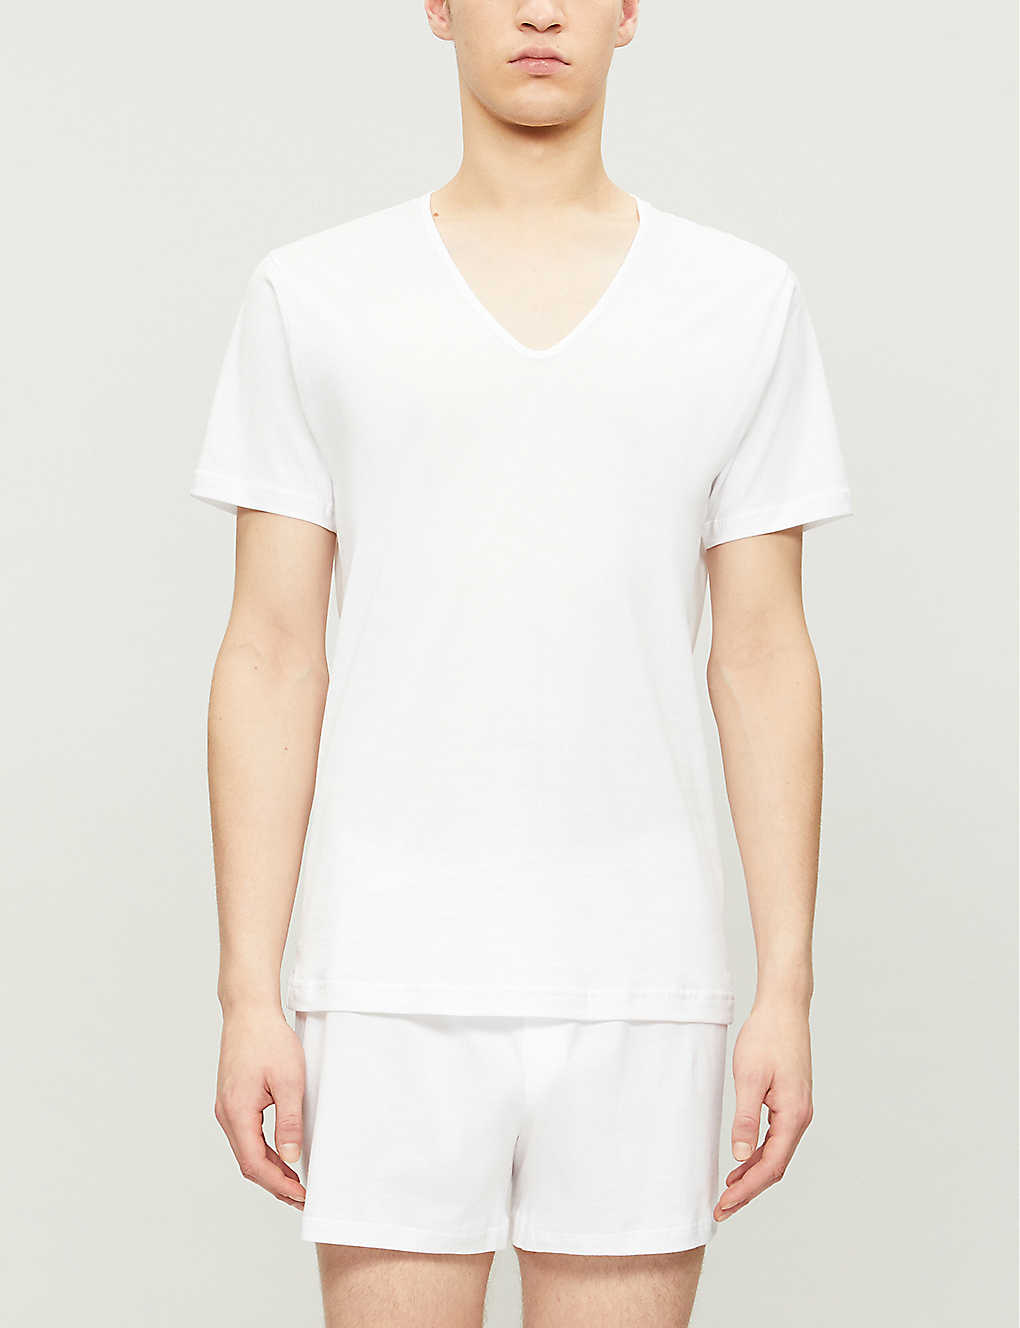 Sunspel Superfine Egyptian Cotton T-shirt In White